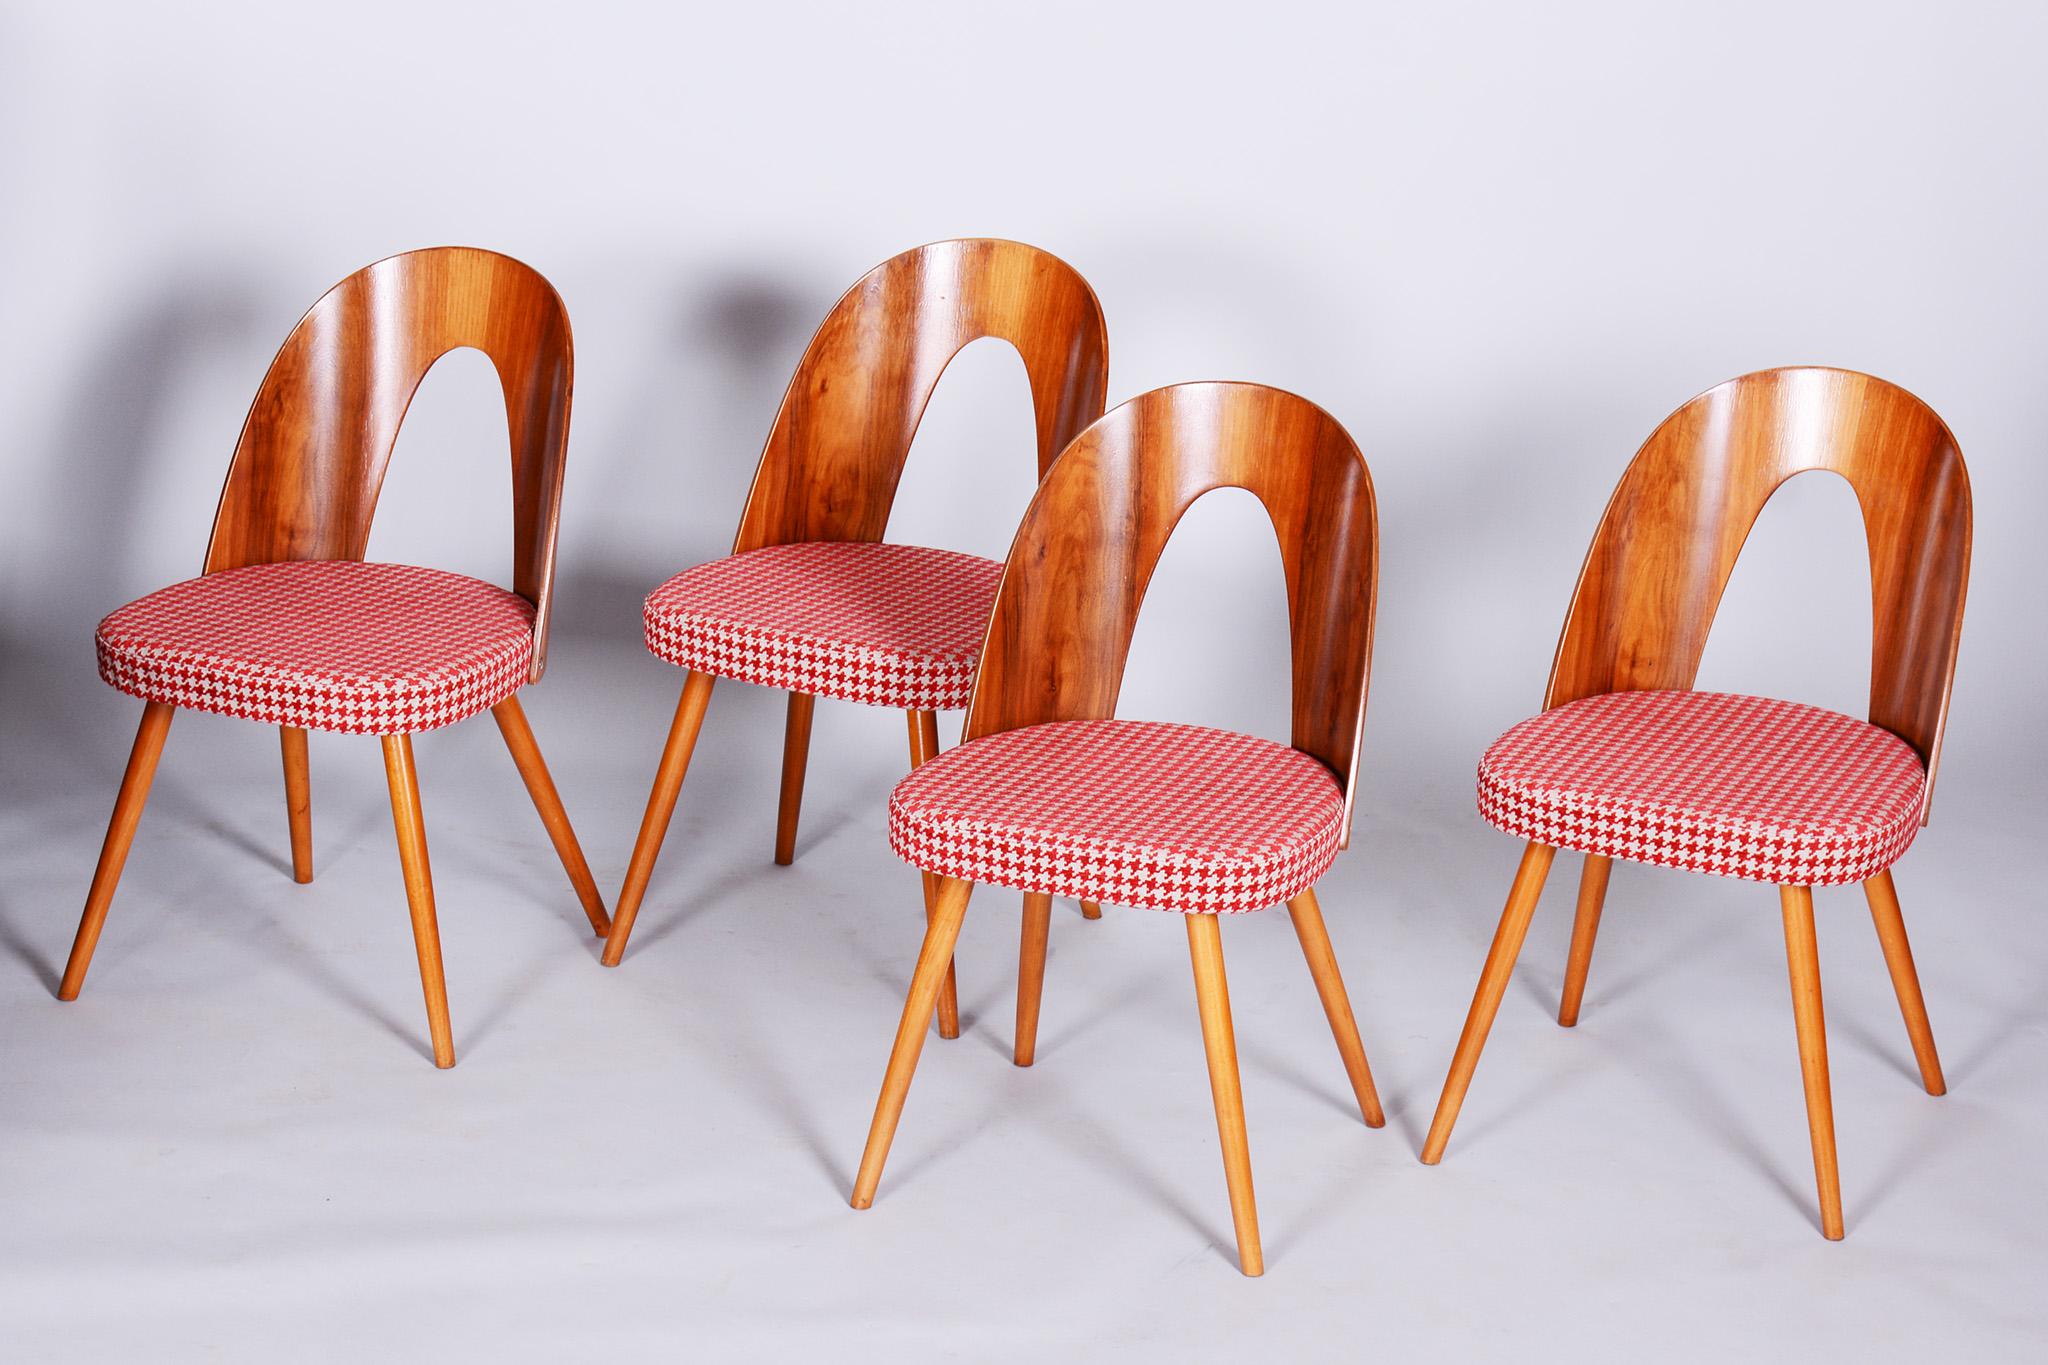 Four Restored Midcentury Chairs, Antonin Suman, Beech, Walnut, Czechia, 1950s For Sale 3